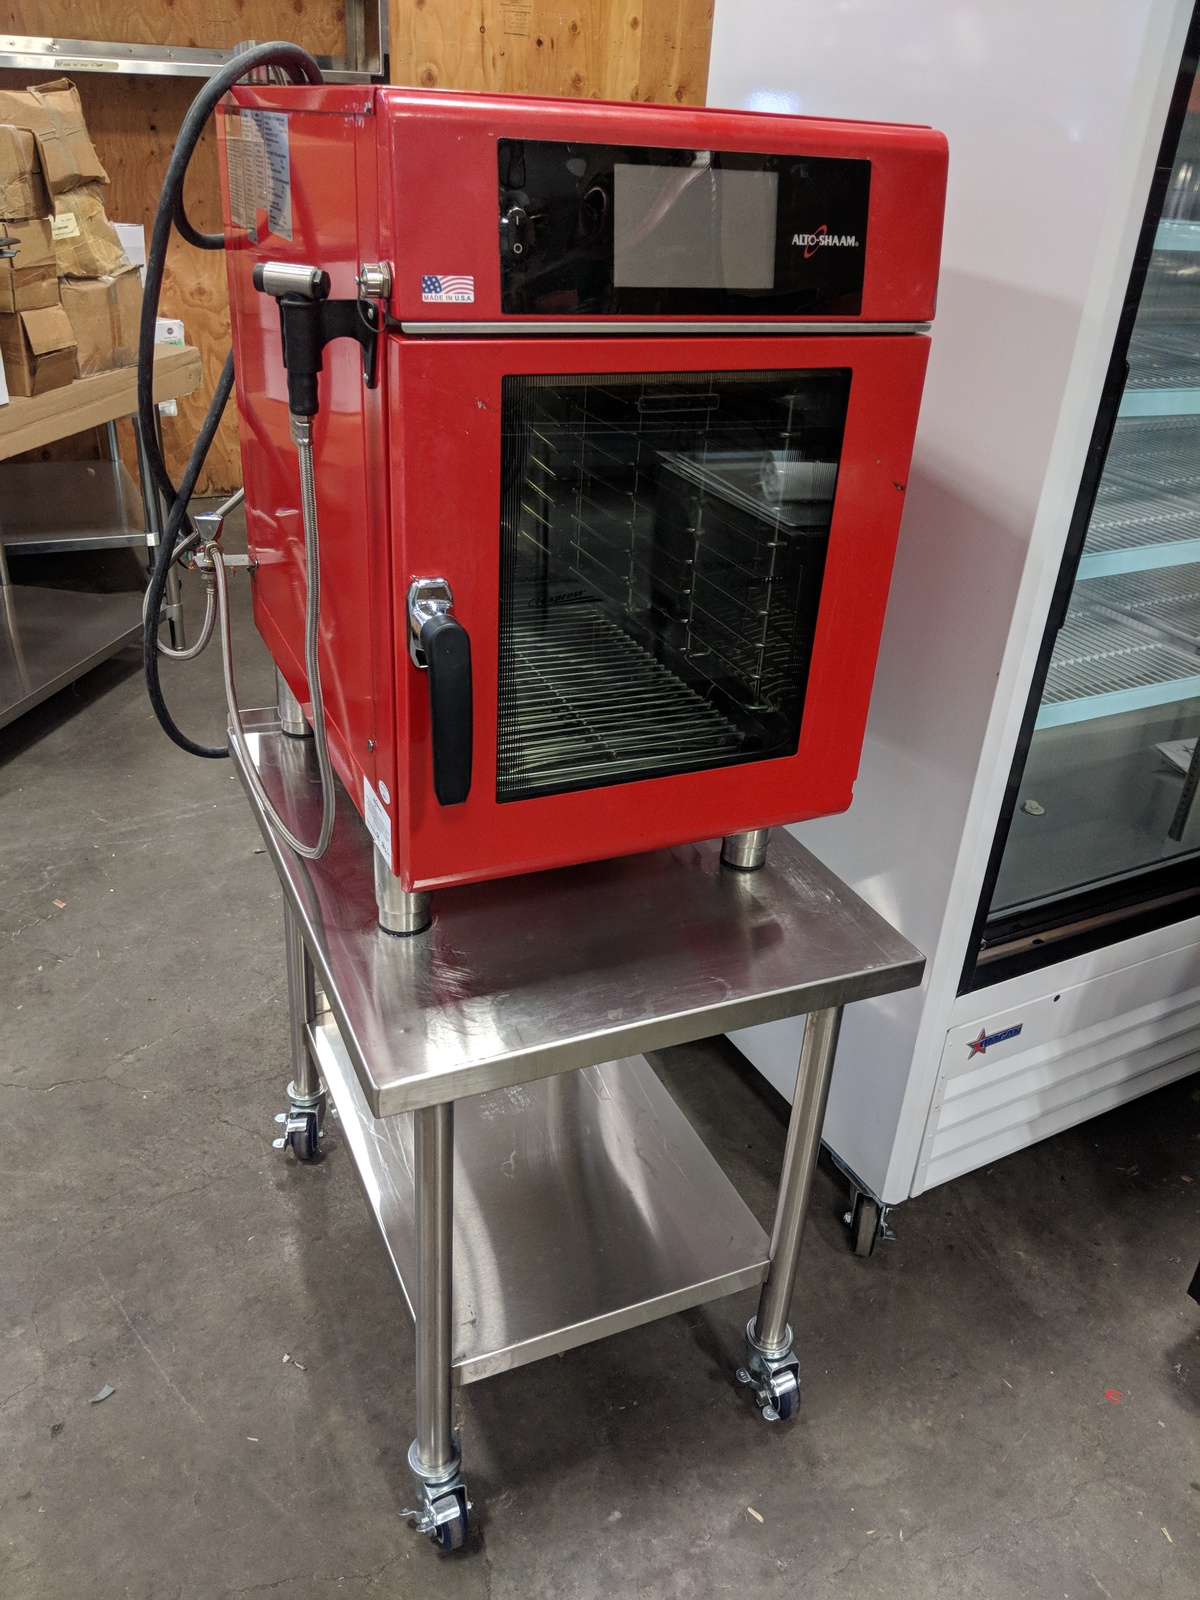 True 60" Worktop Freezers, Robot Coupes, Nuova Simonelli Espresso & Grinder, Hot Chocolate Machines, Sandwich Prep and Glass Display Coolers